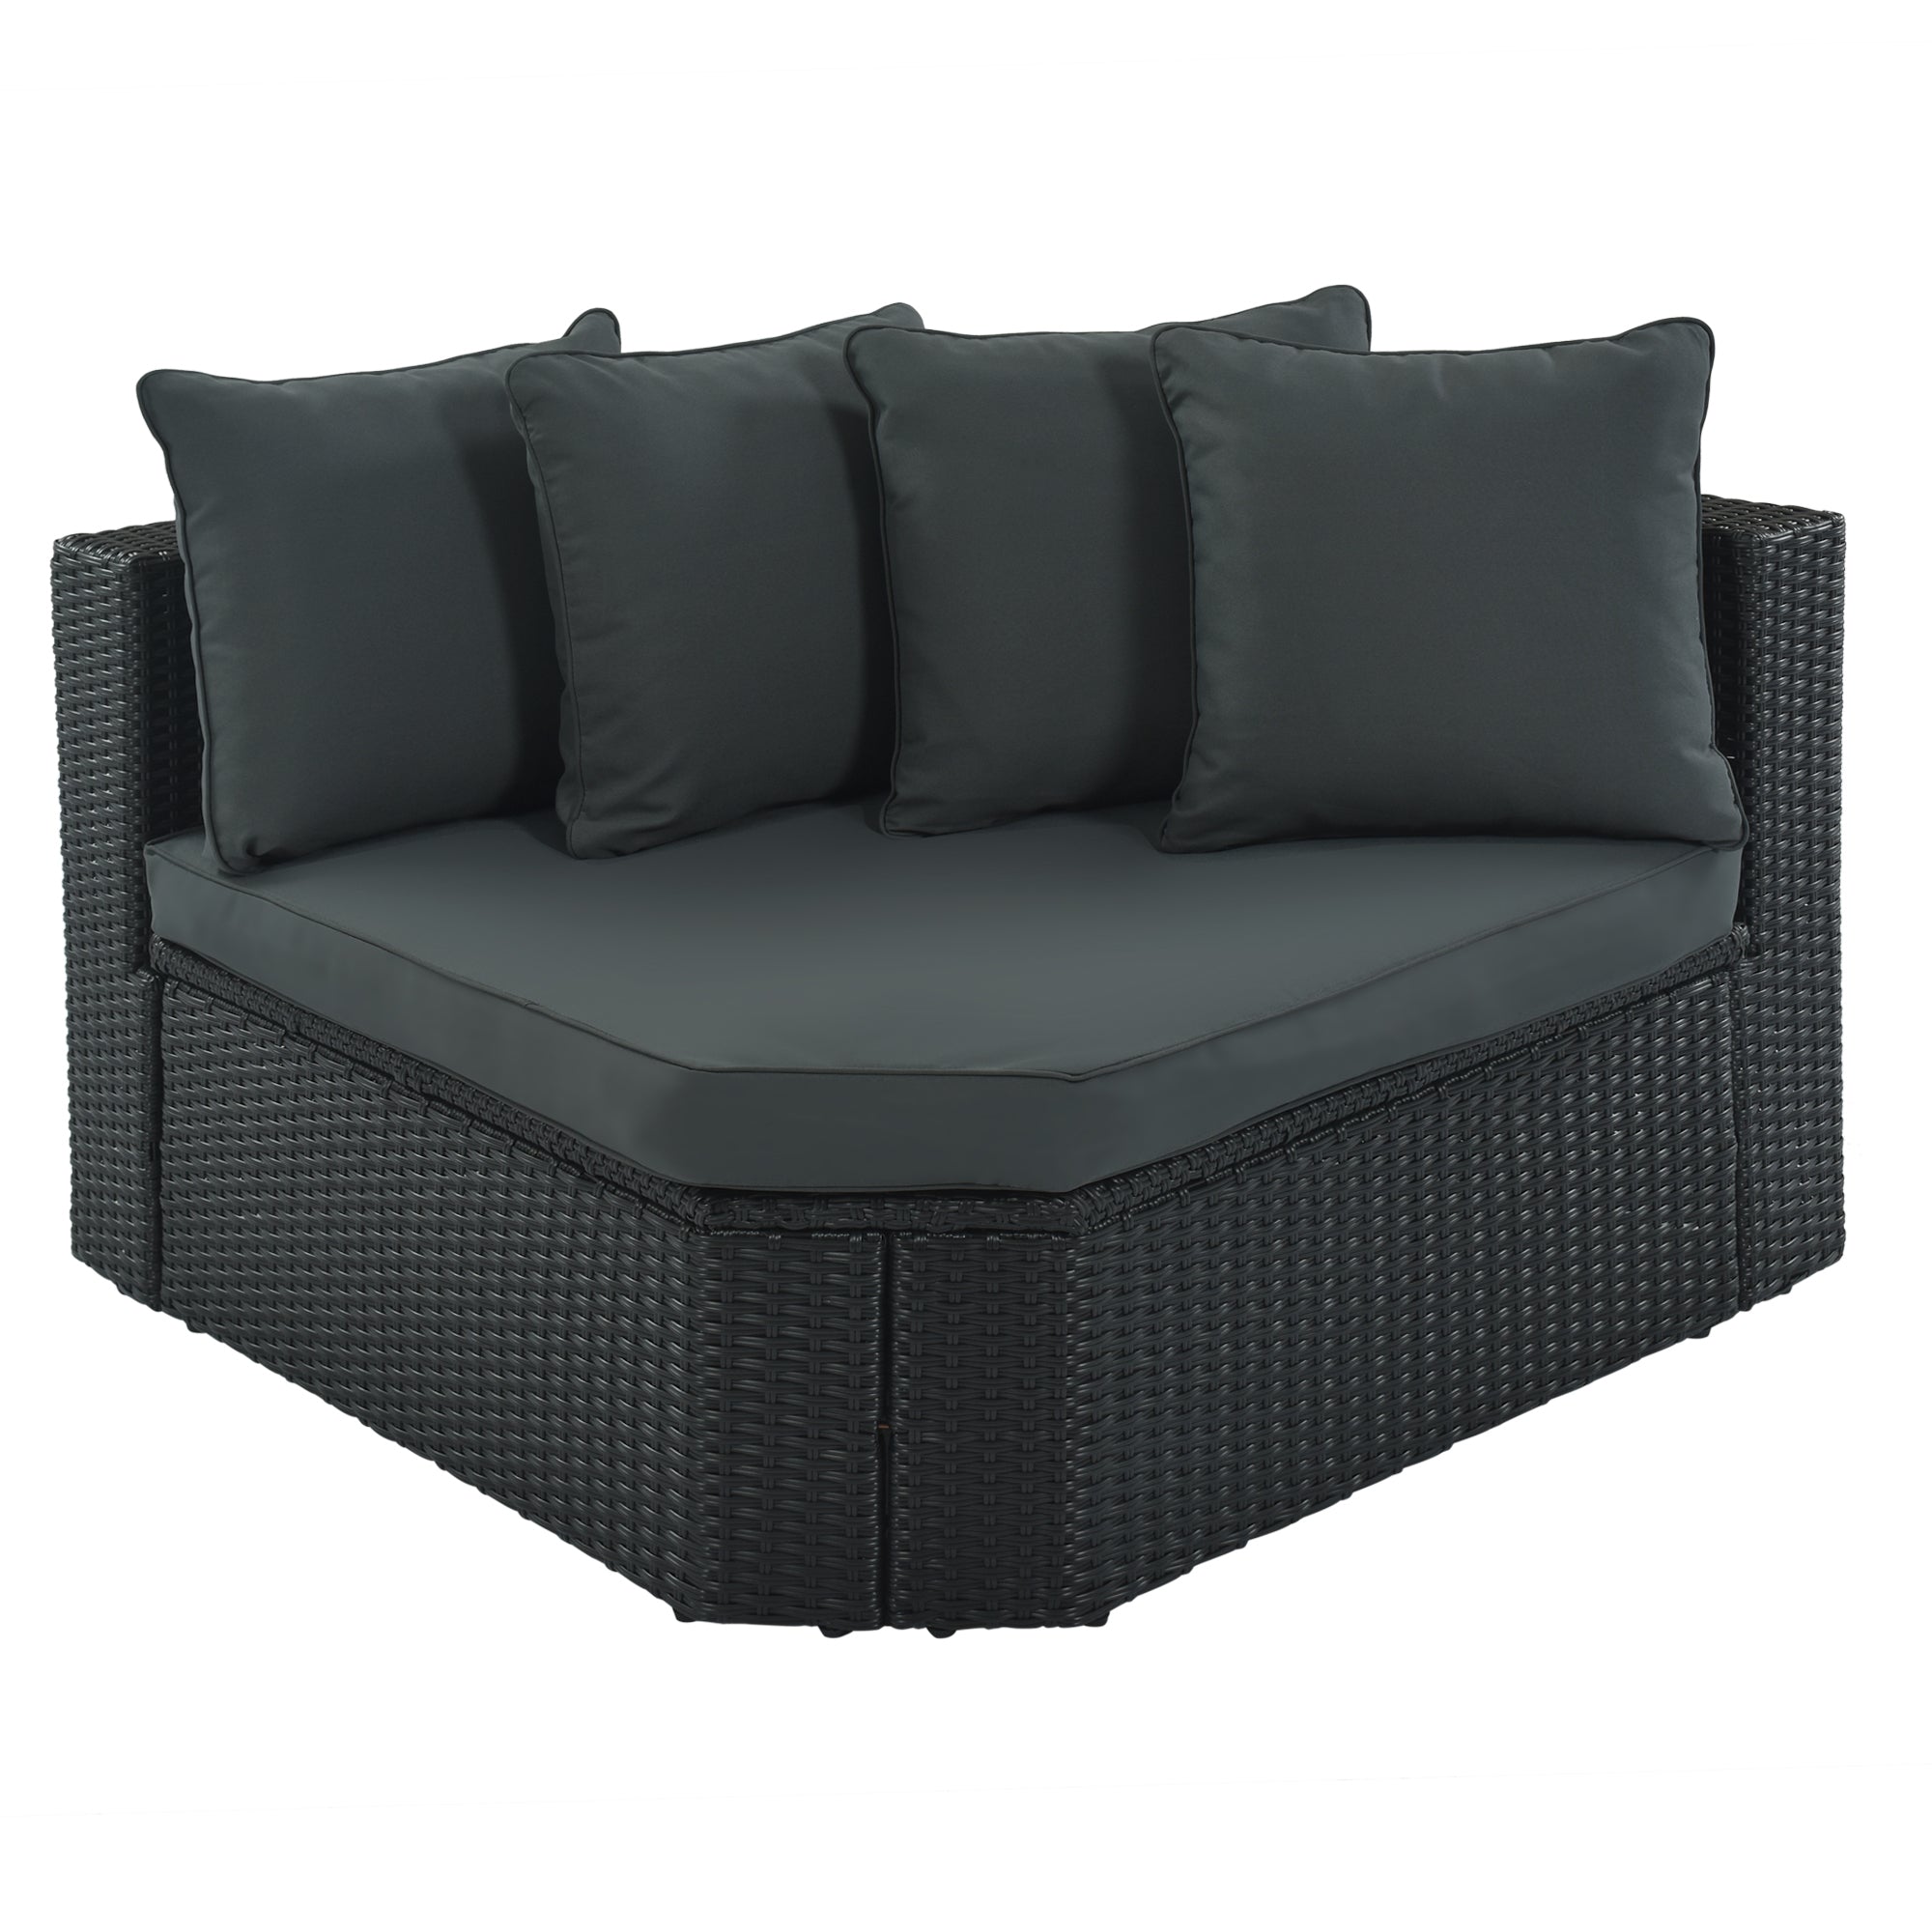 7-piece Outdoor Wicker Sofa Set, Rattan Sofa Lounger with Green Pillows, Black Wicker, Gray Cushion